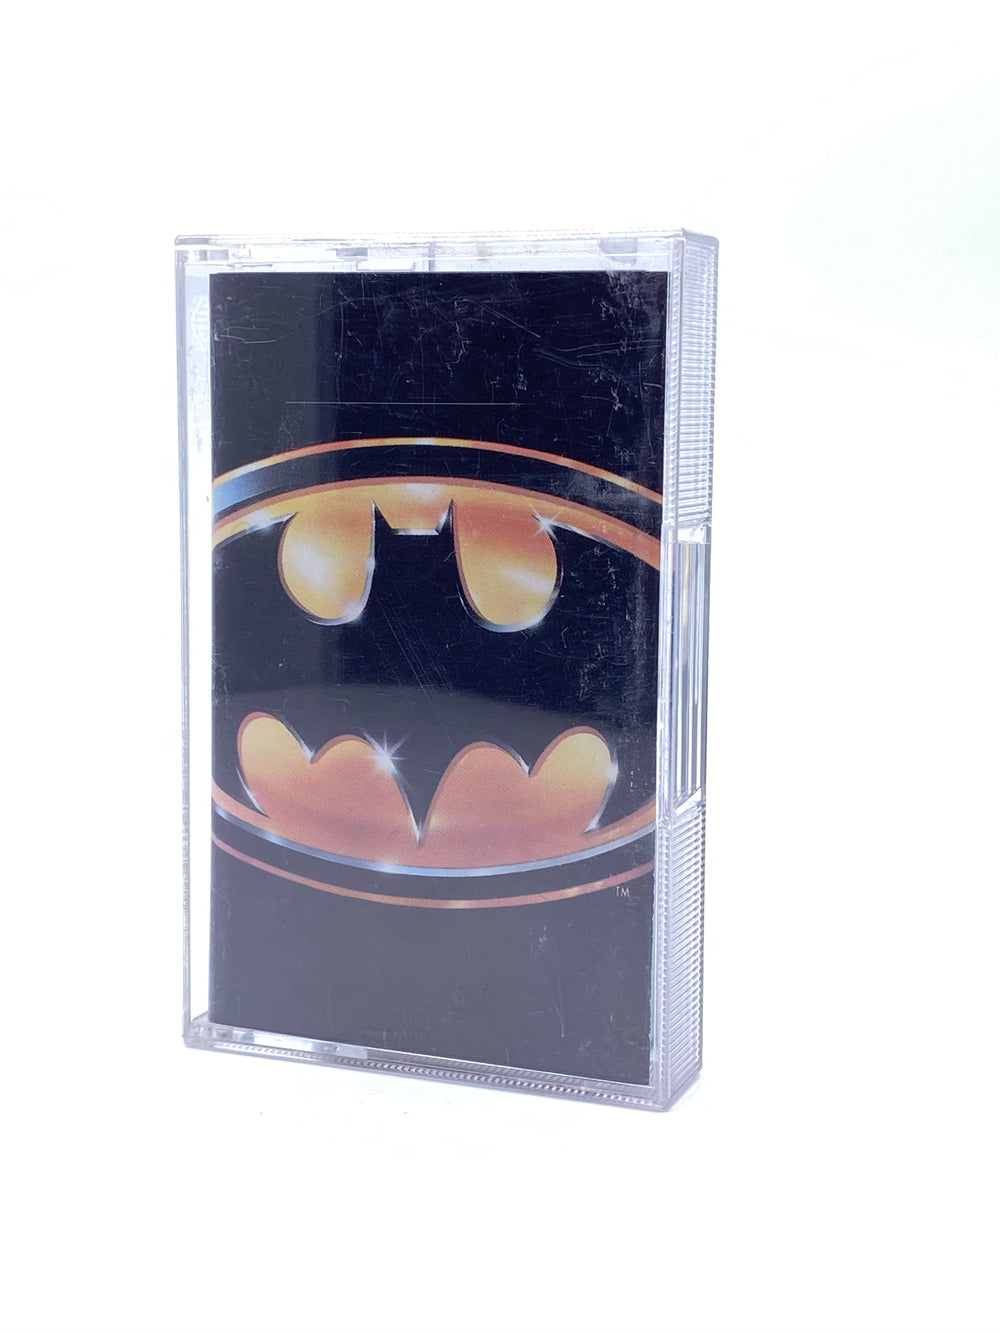 Prince - Batman™ (Motion Picture Soundtrack) Cassette Tape Album UK Preloved:1989